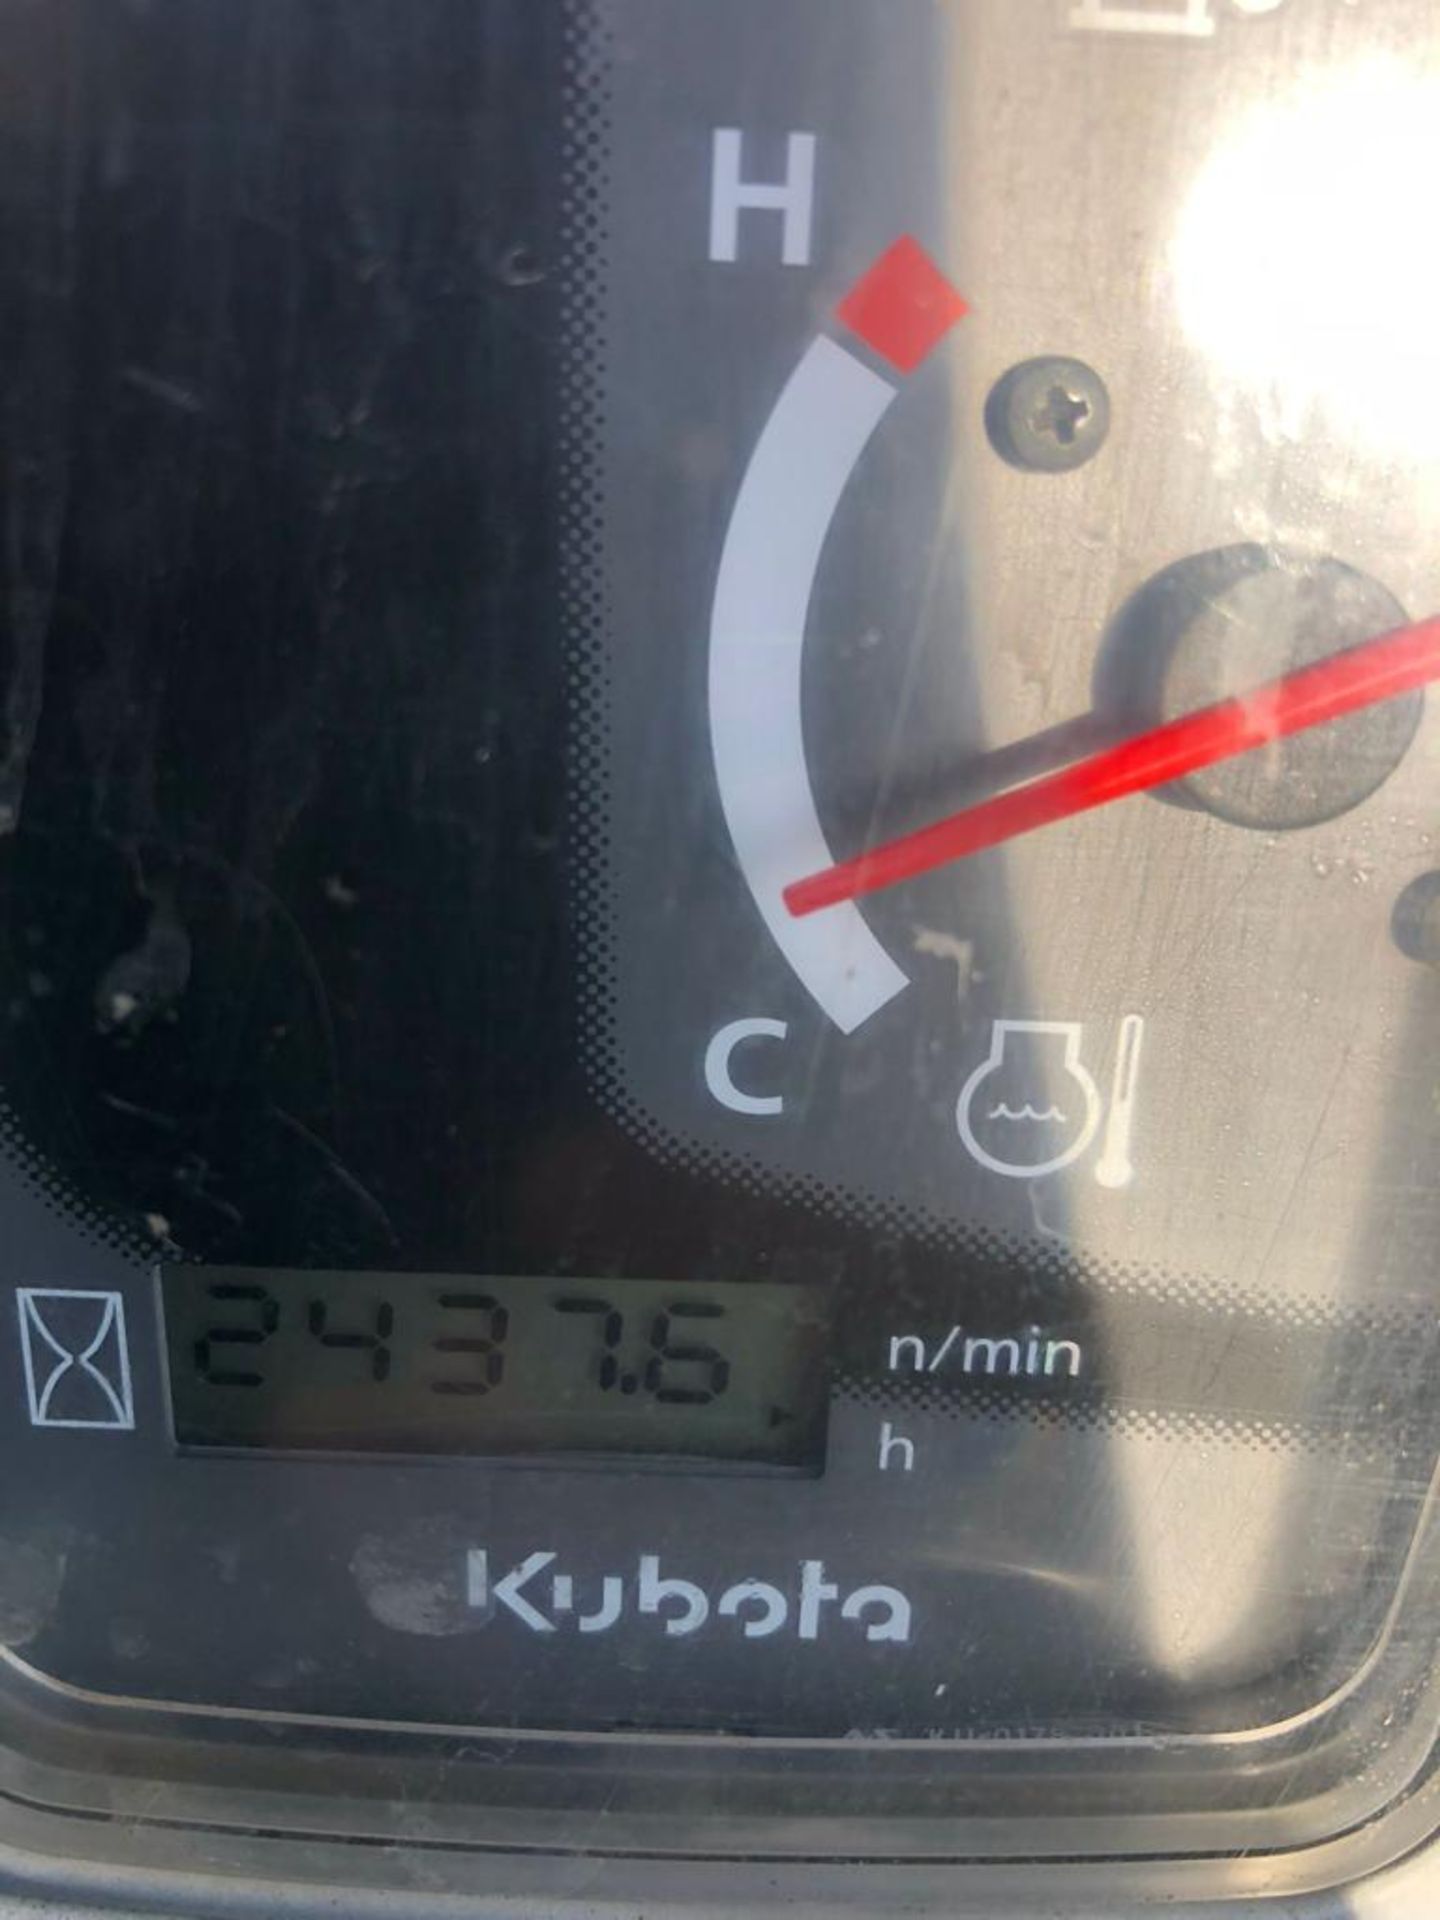 2015 KUBOTA KXO-15-4 1.5 TON DIGGER, RUNS DRIVES AND DIGS AS IT SHOULD, 2437 HOURS *PLUS VAT* - Image 6 of 7